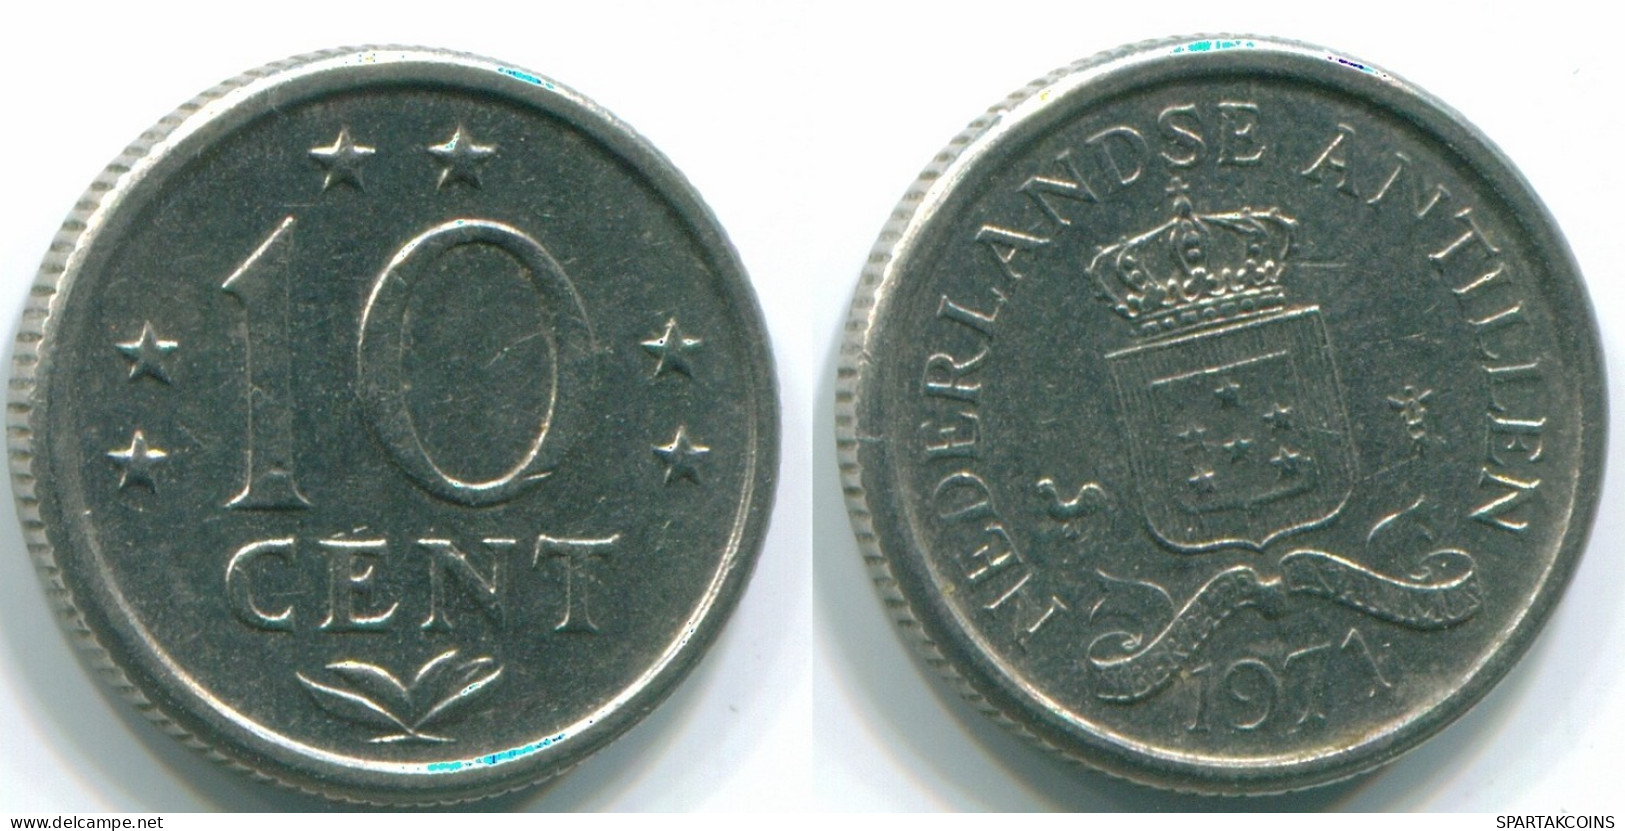 10 CENTS 1971 NETHERLANDS ANTILLES Nickel Colonial Coin #S13452.U.A - Antilles Néerlandaises